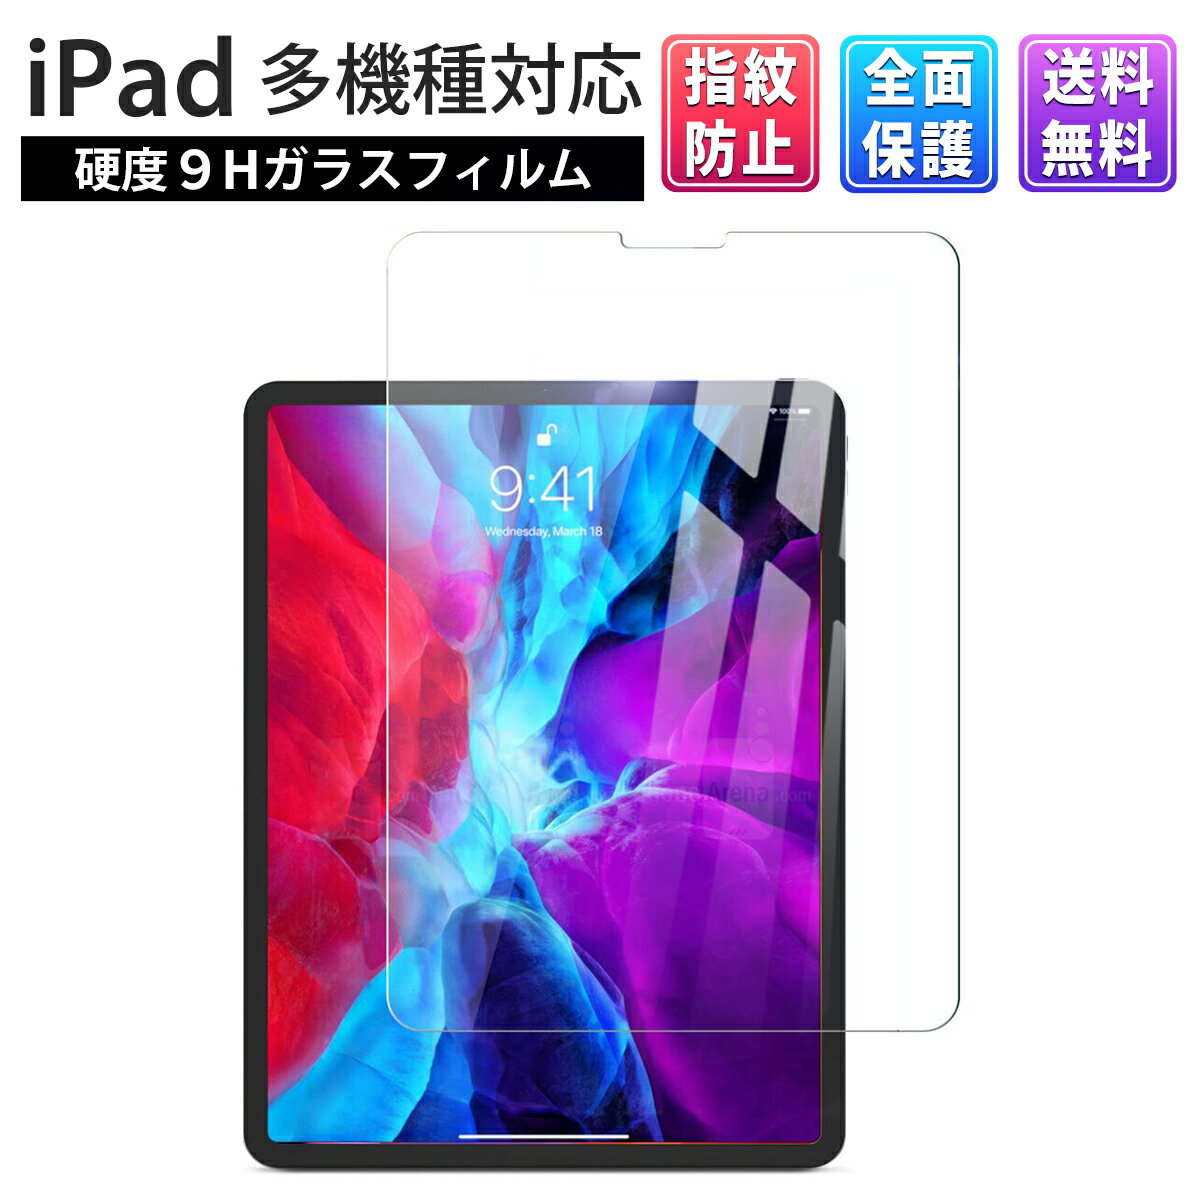 iPad ガラス フィルム 10.2 第9世代 Air Pro 12.9 mini 4 5 ガラスフィルム 画面 本体 飛散防止 自己吸着 保証 クリア